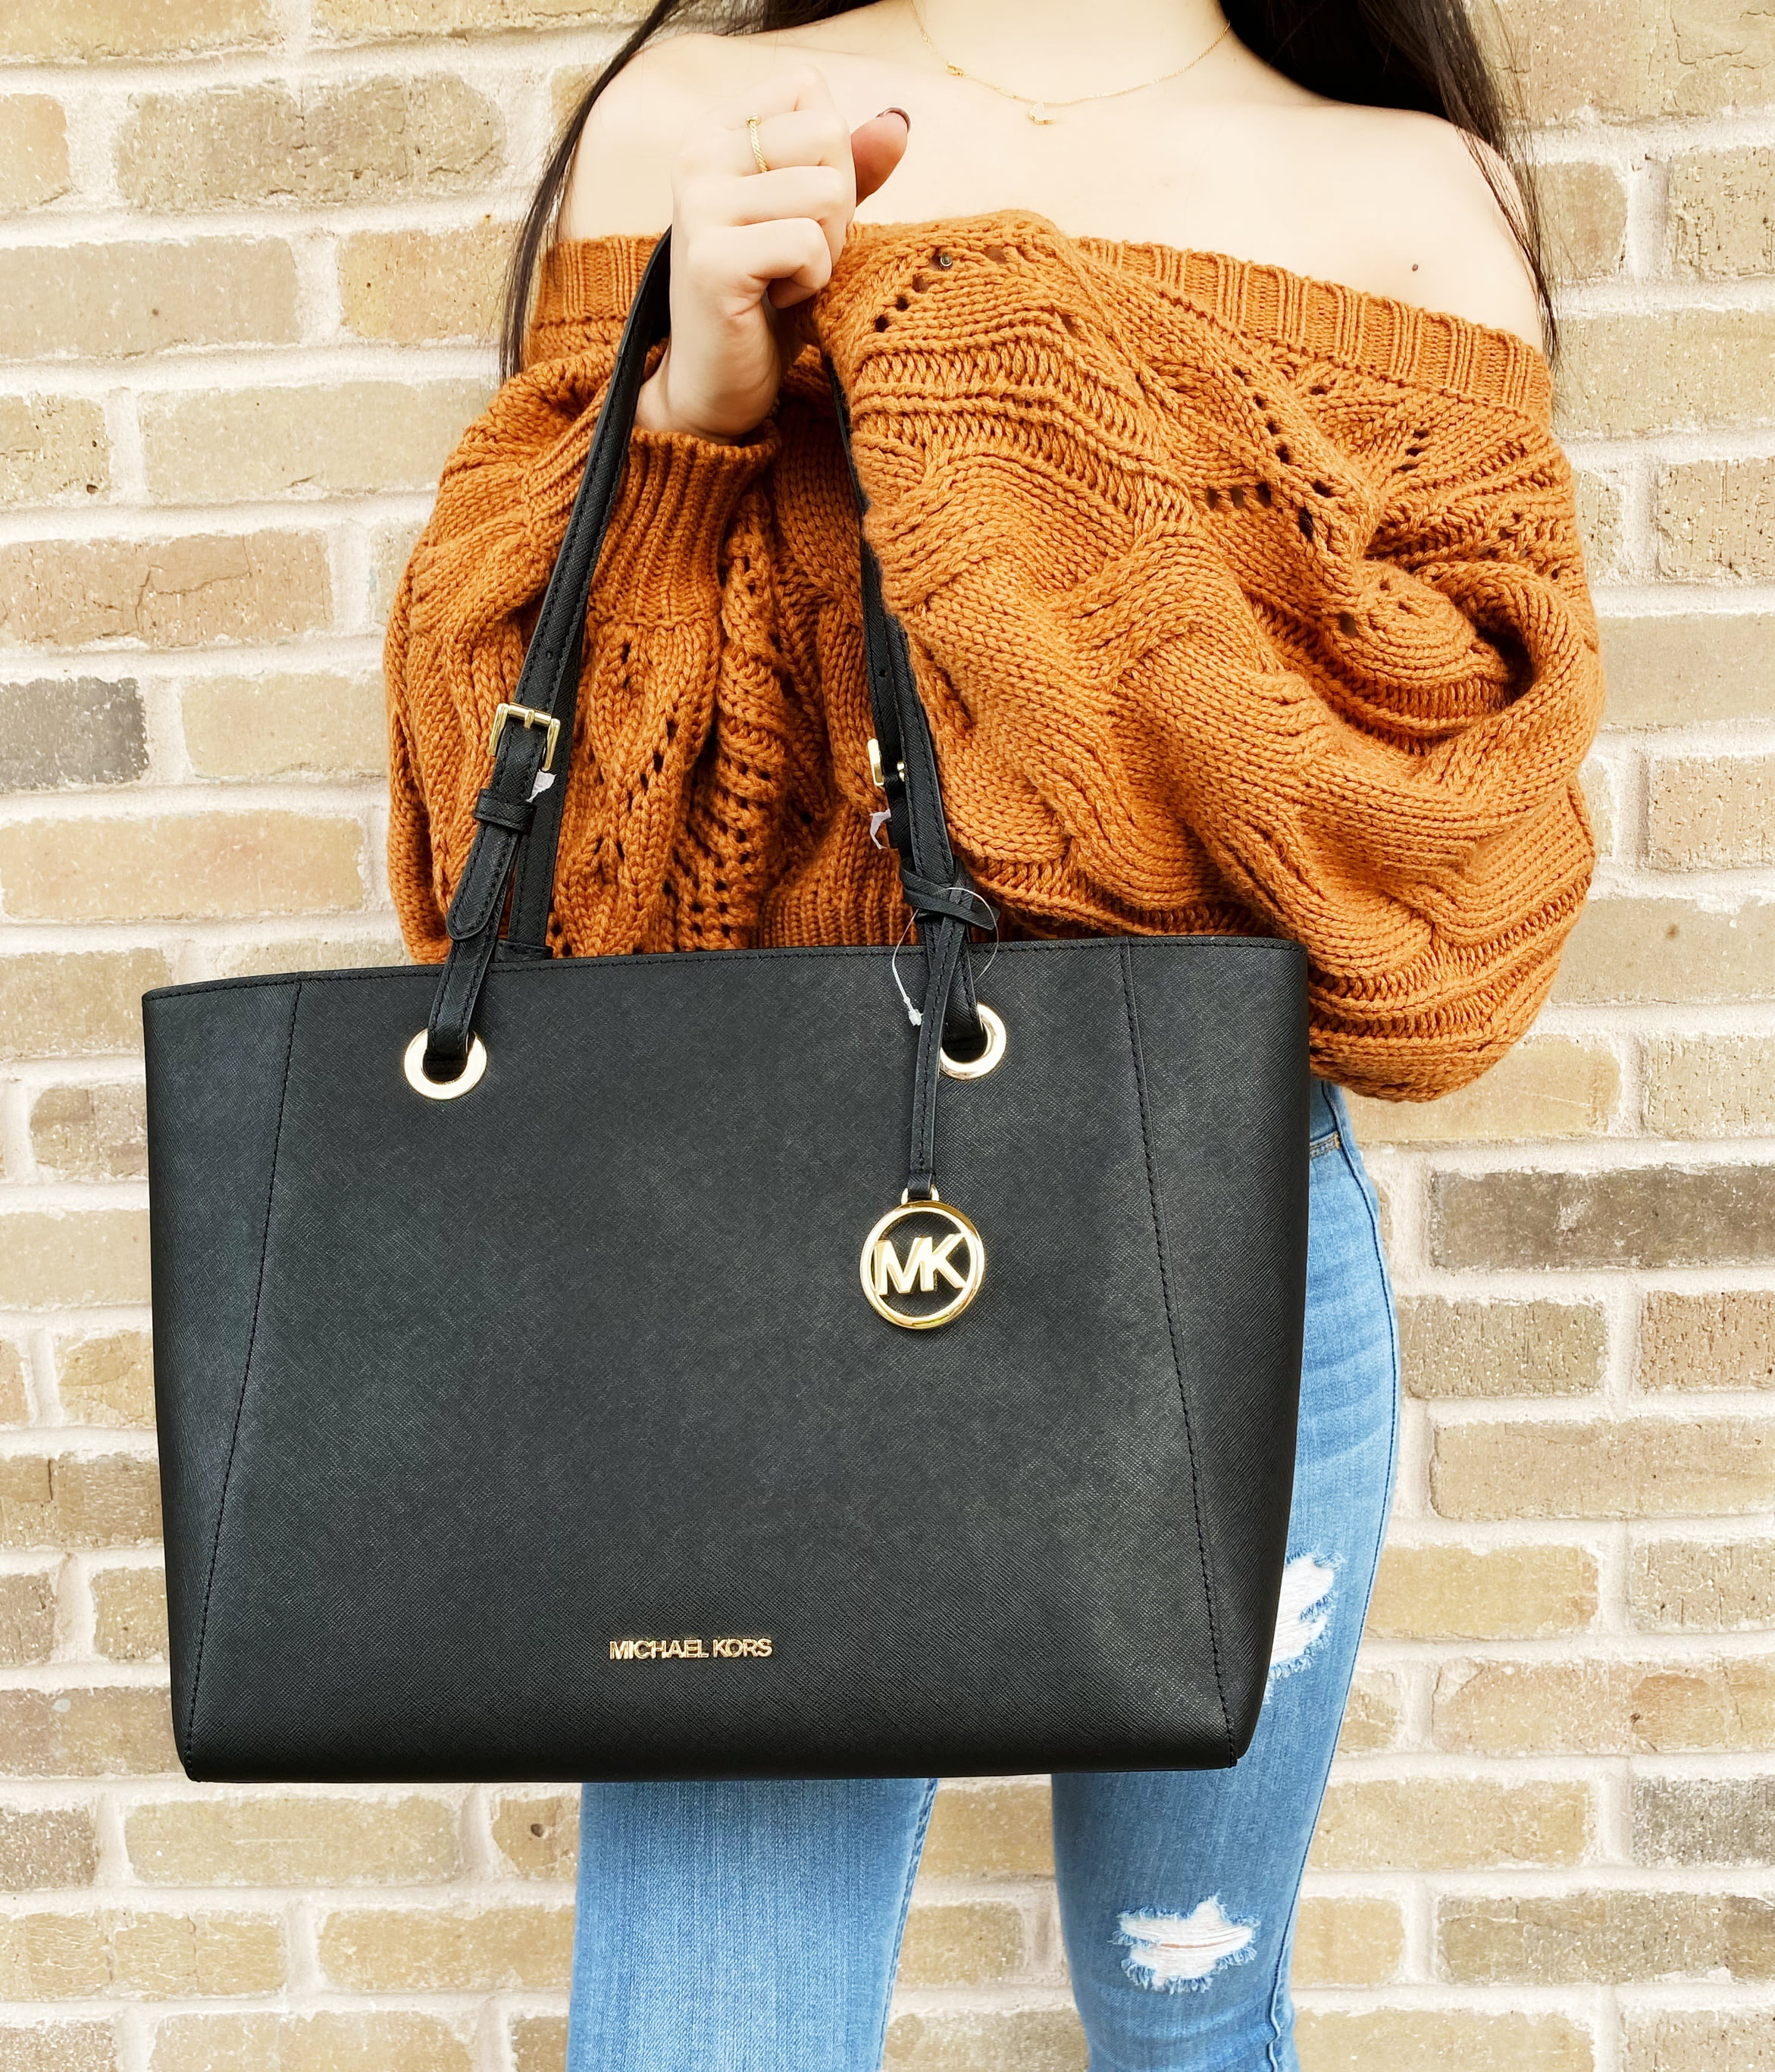 MK black handbag with gold hardware